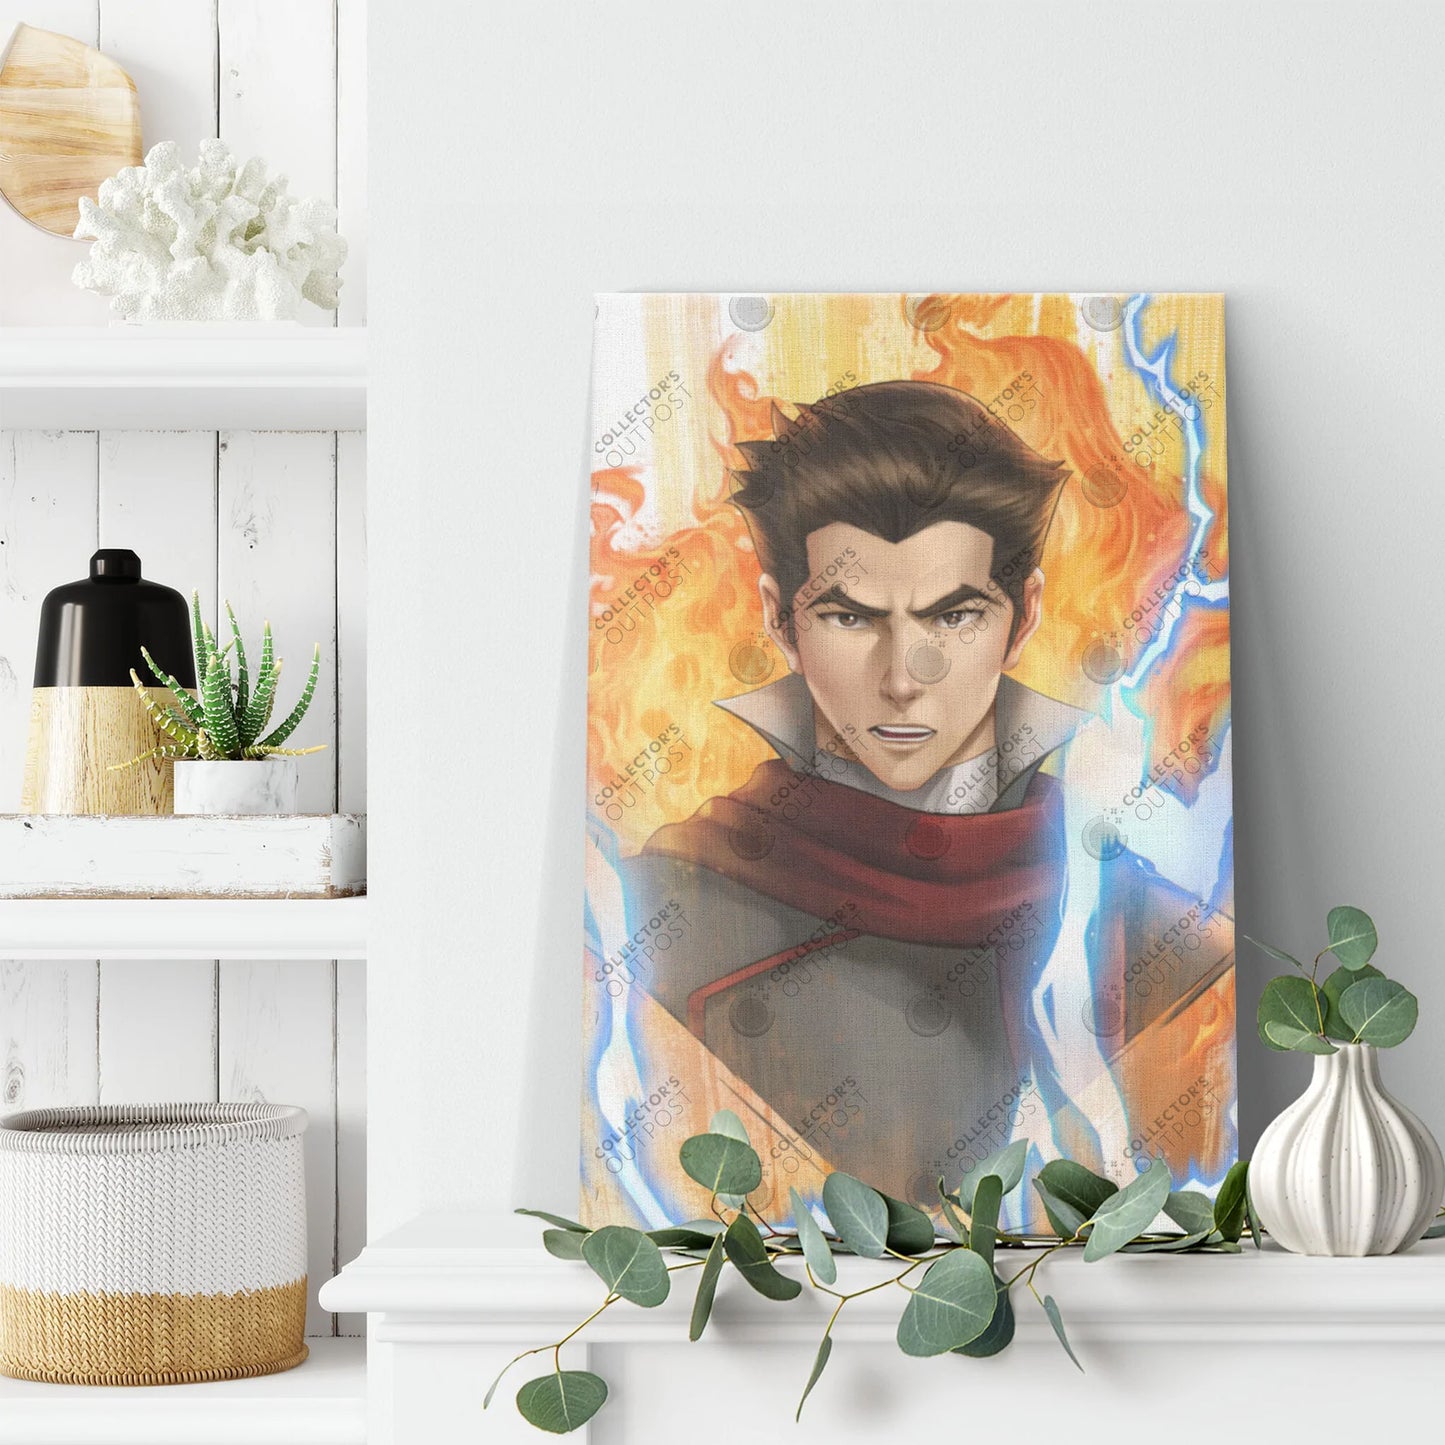 Mako "Fire Brother" (Avatar: The Legend of Korra) Legacy Portrait Art Print